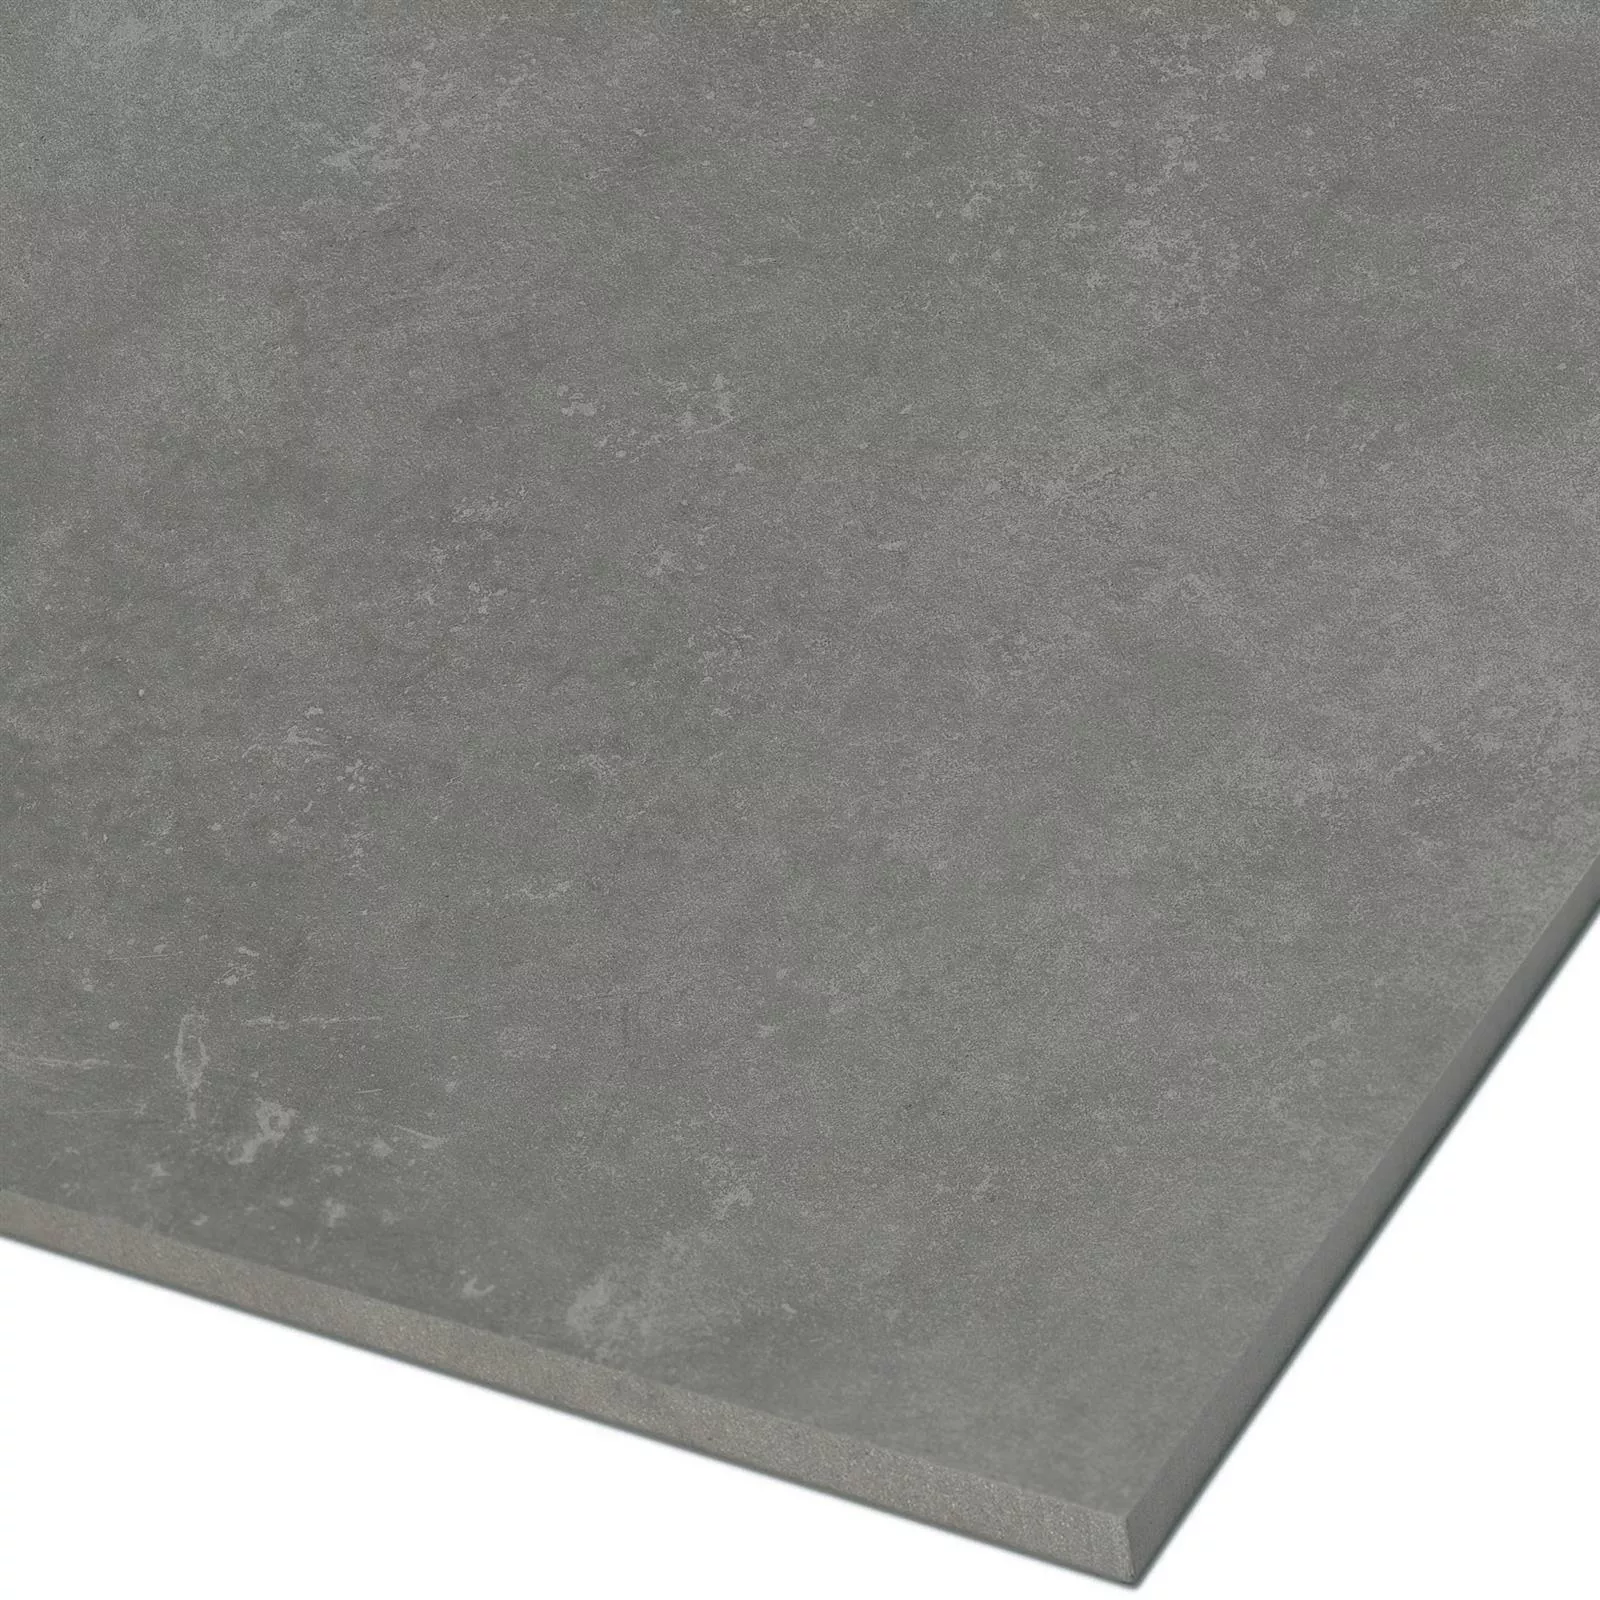 Vloertegels Cement Optic Nepal Slim Donkergrijs 60x60cm